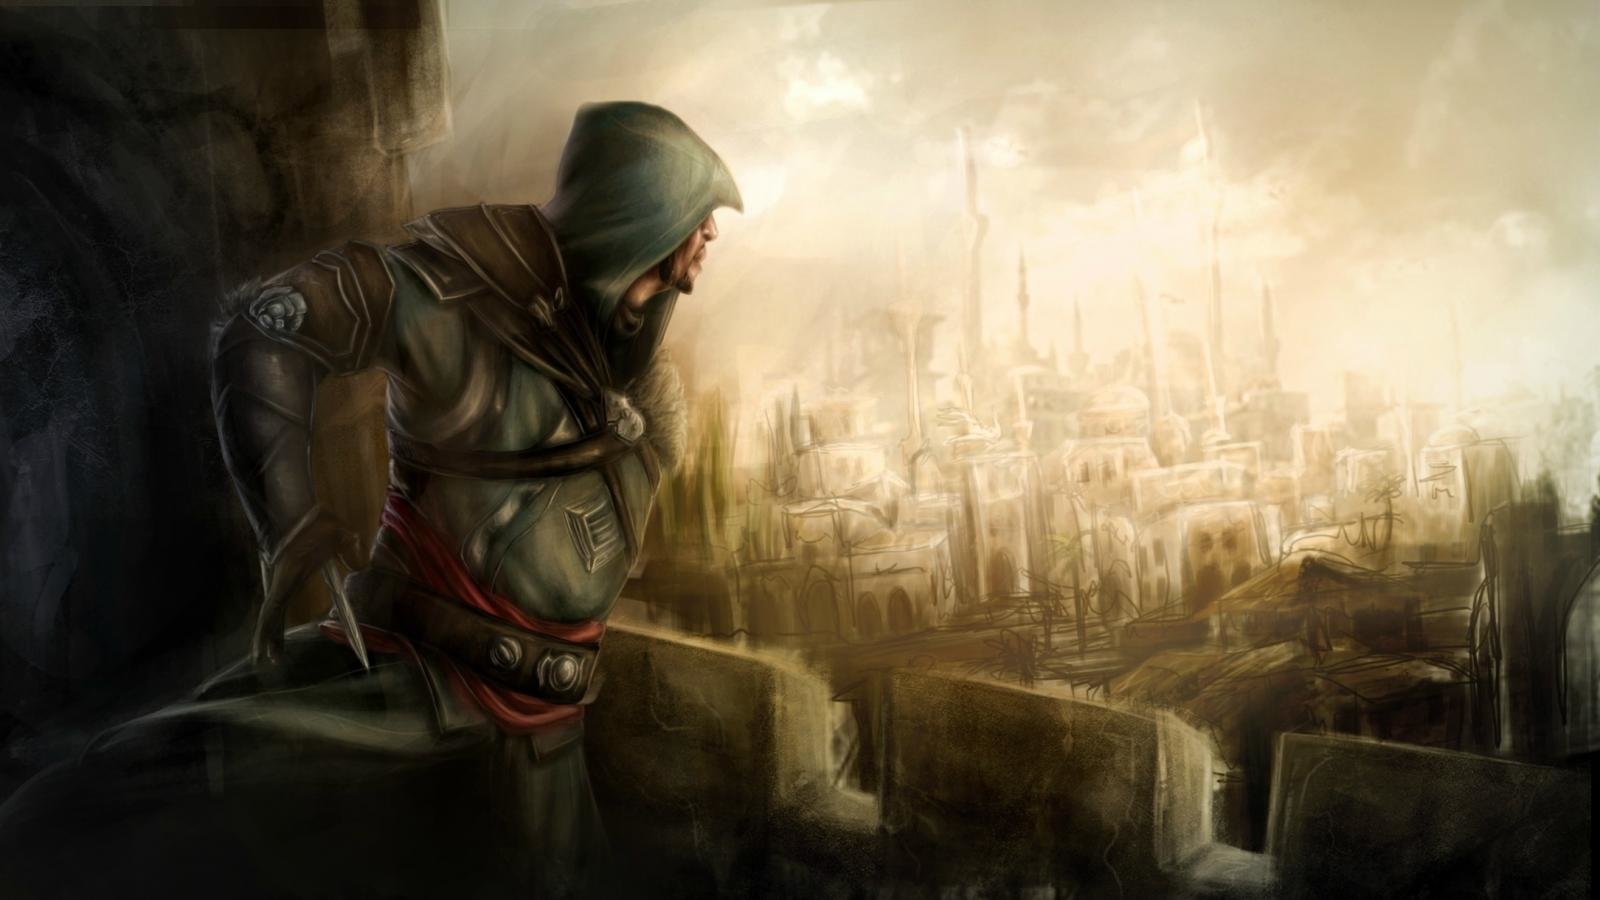 Best Assassin's Creed: Revelations wallpaper ID:69666 for High Resolution hd 1600x900 desktop